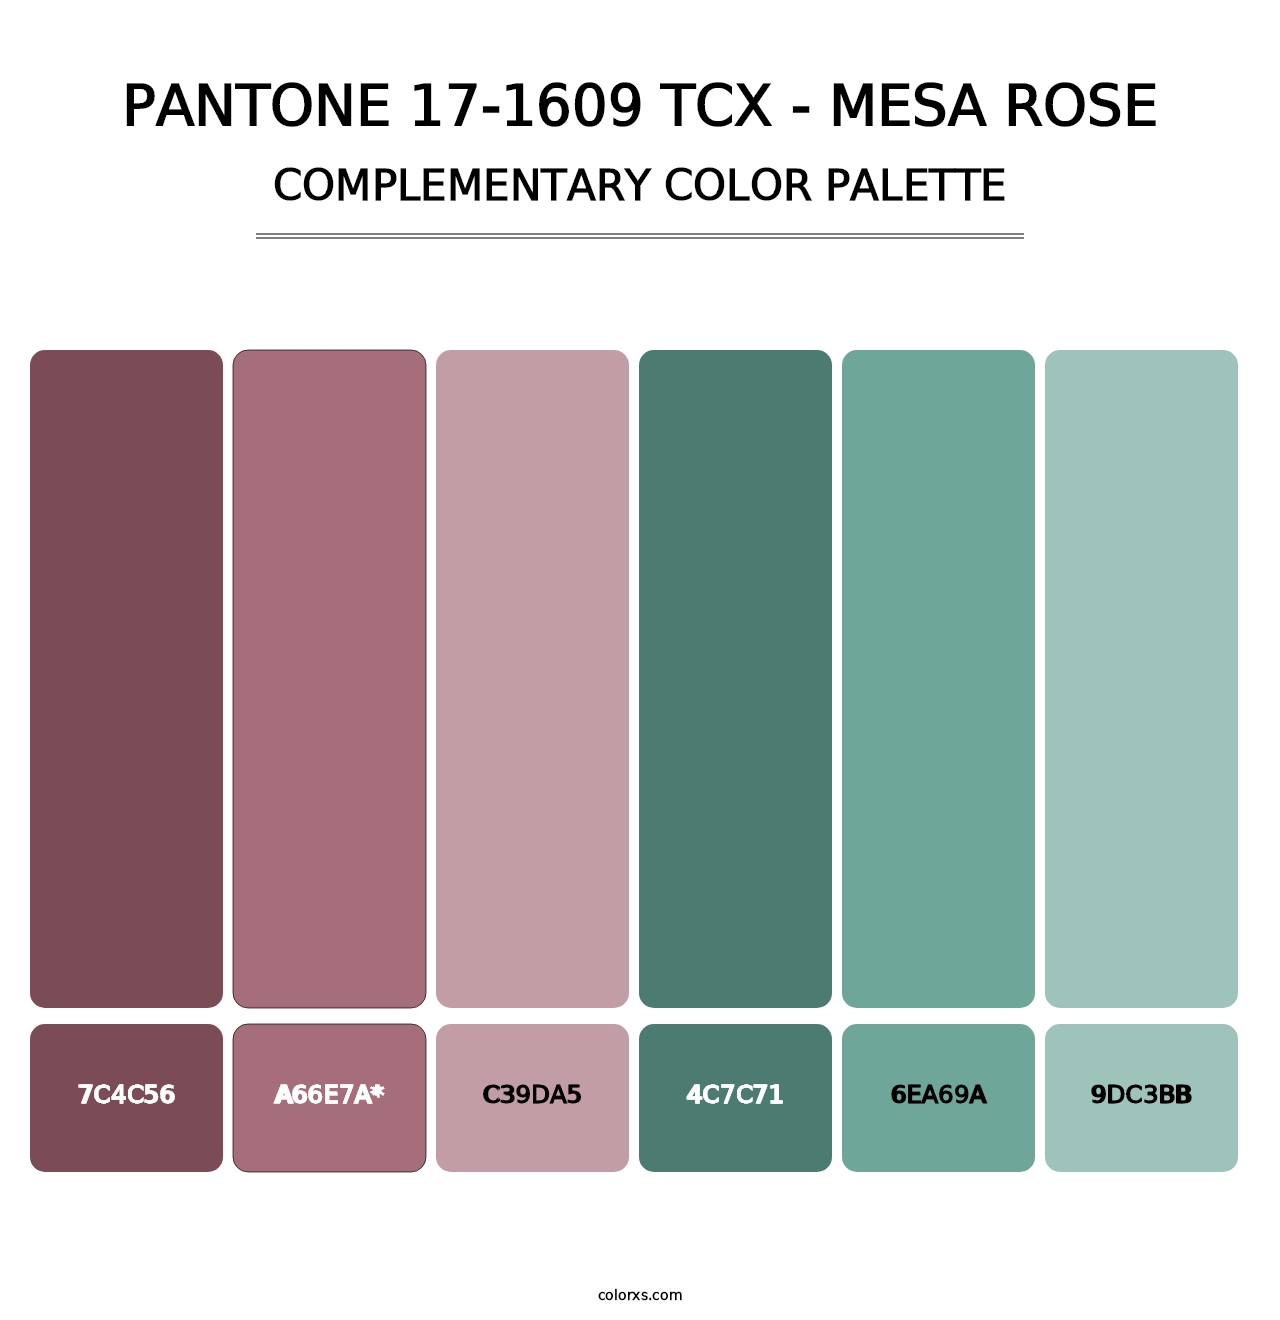 PANTONE 17-1609 TCX - Mesa Rose - Complementary Color Palette